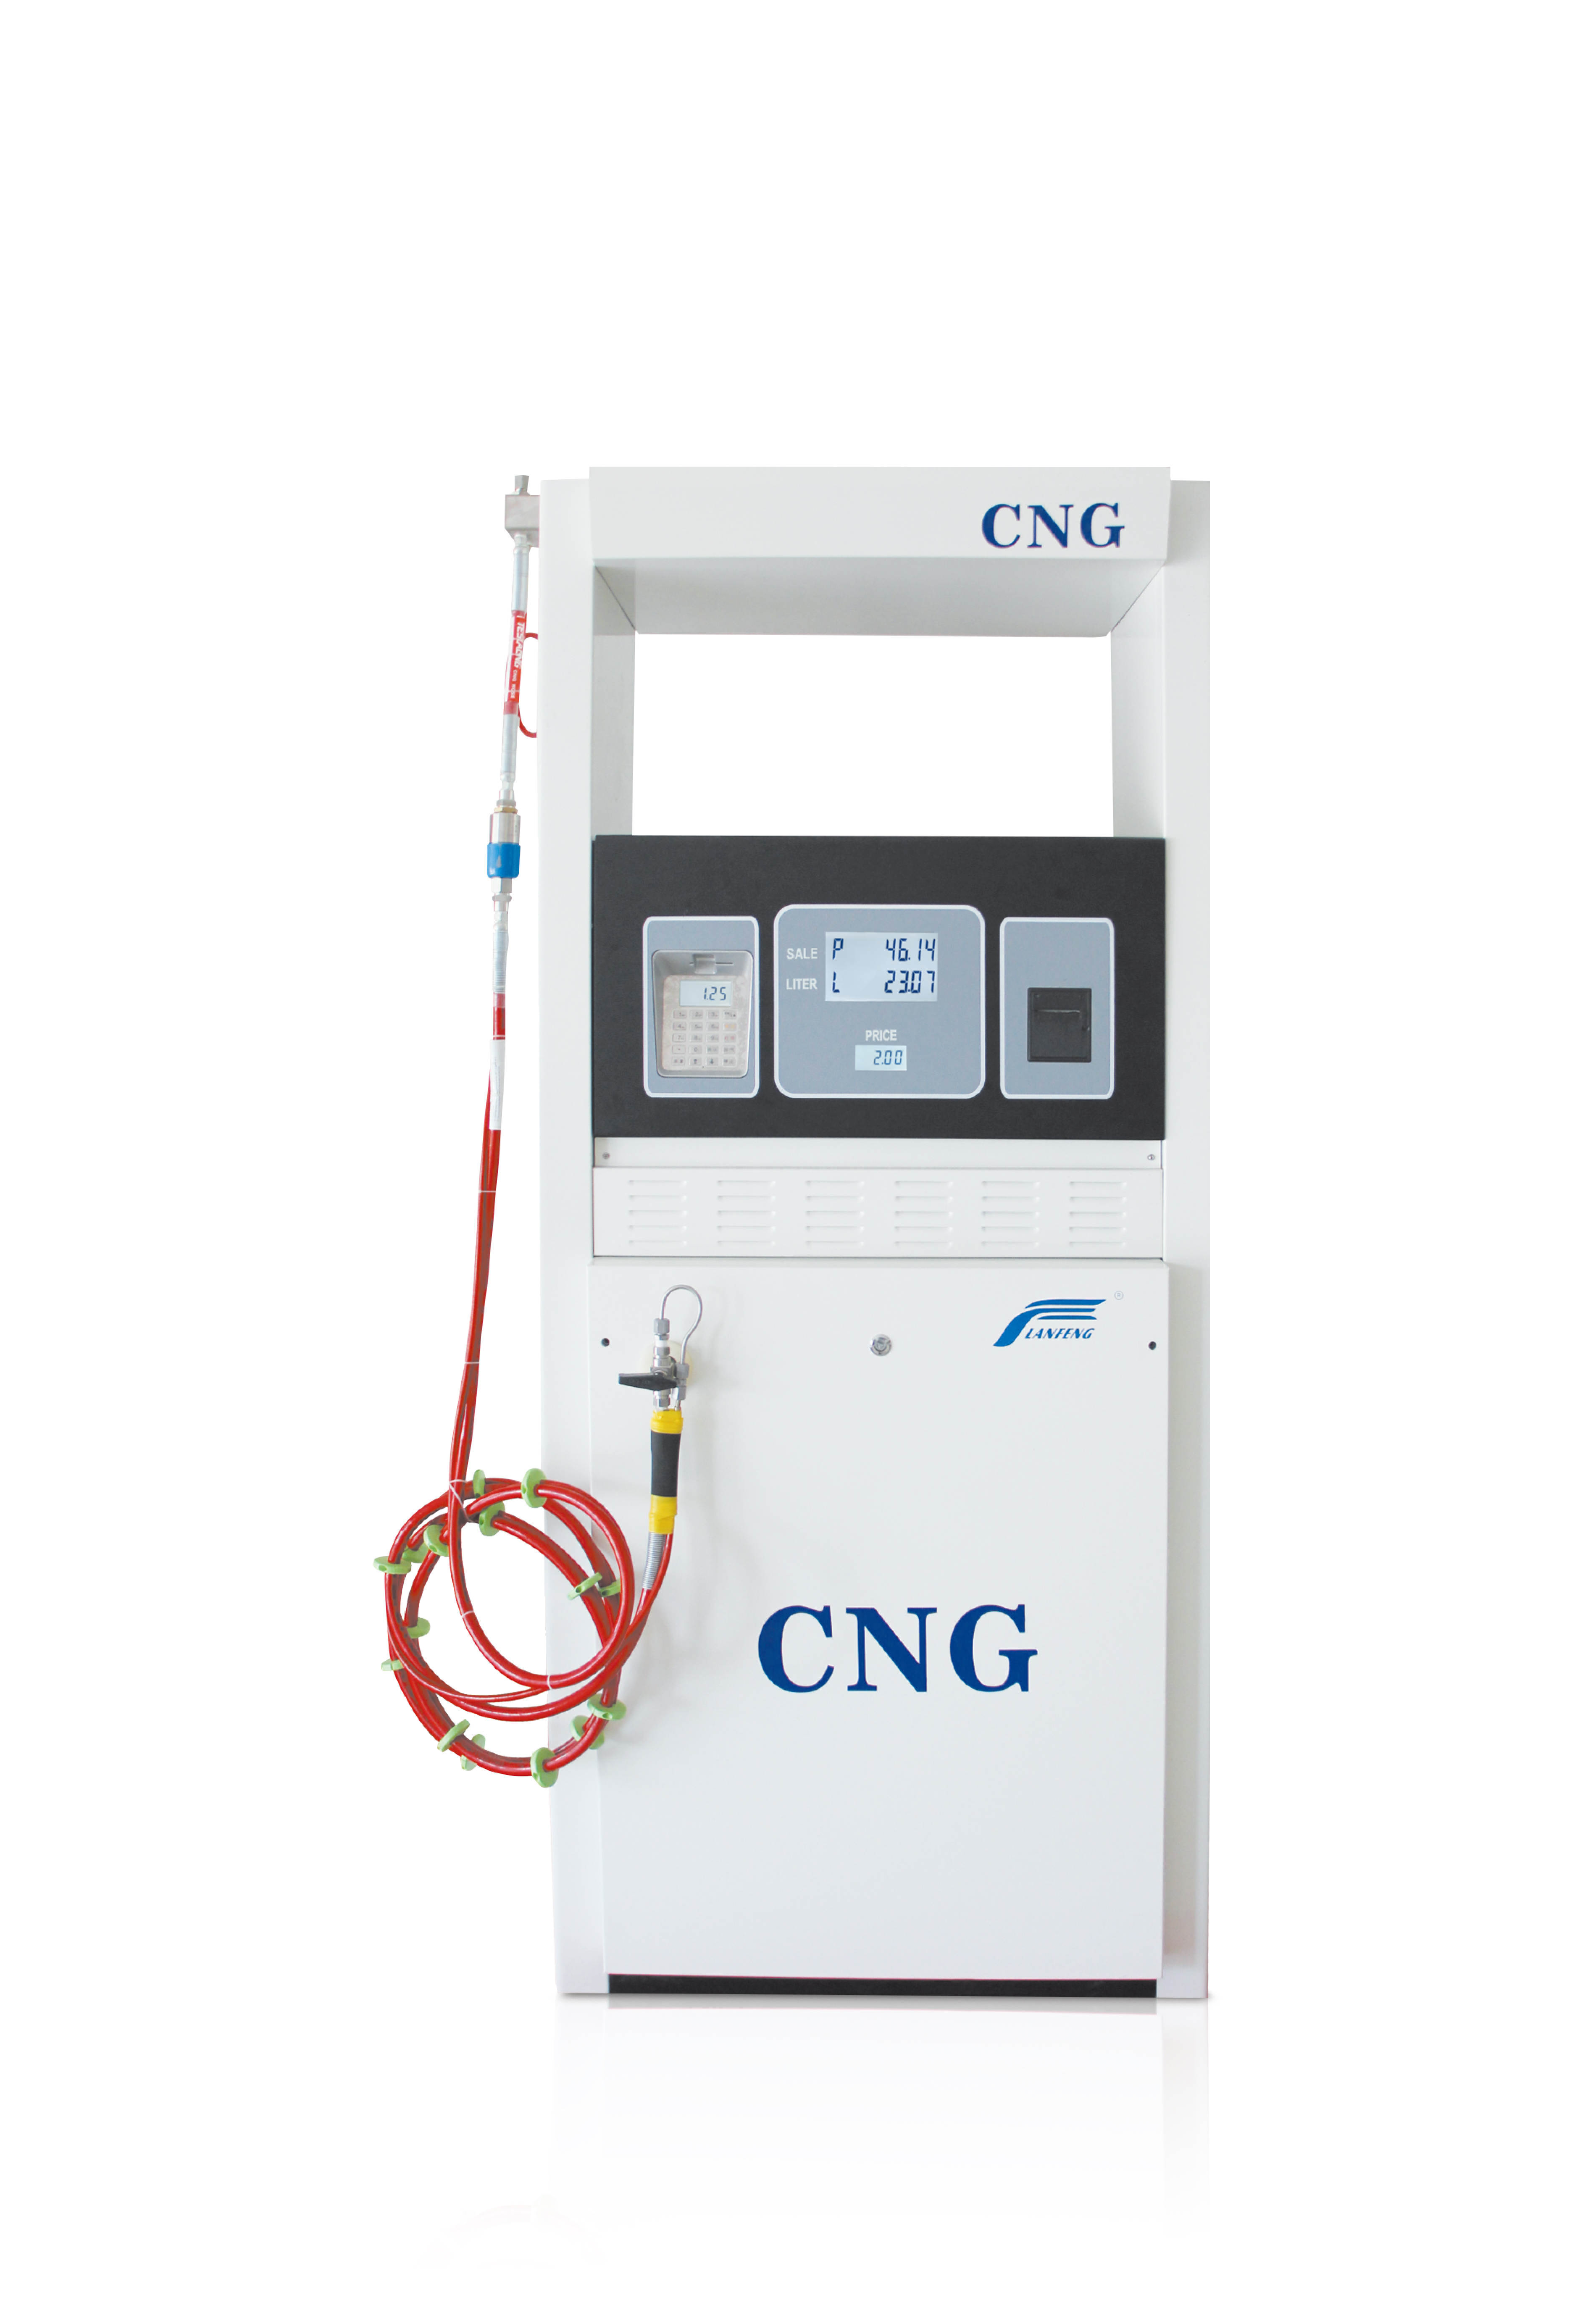 CNG filling machine